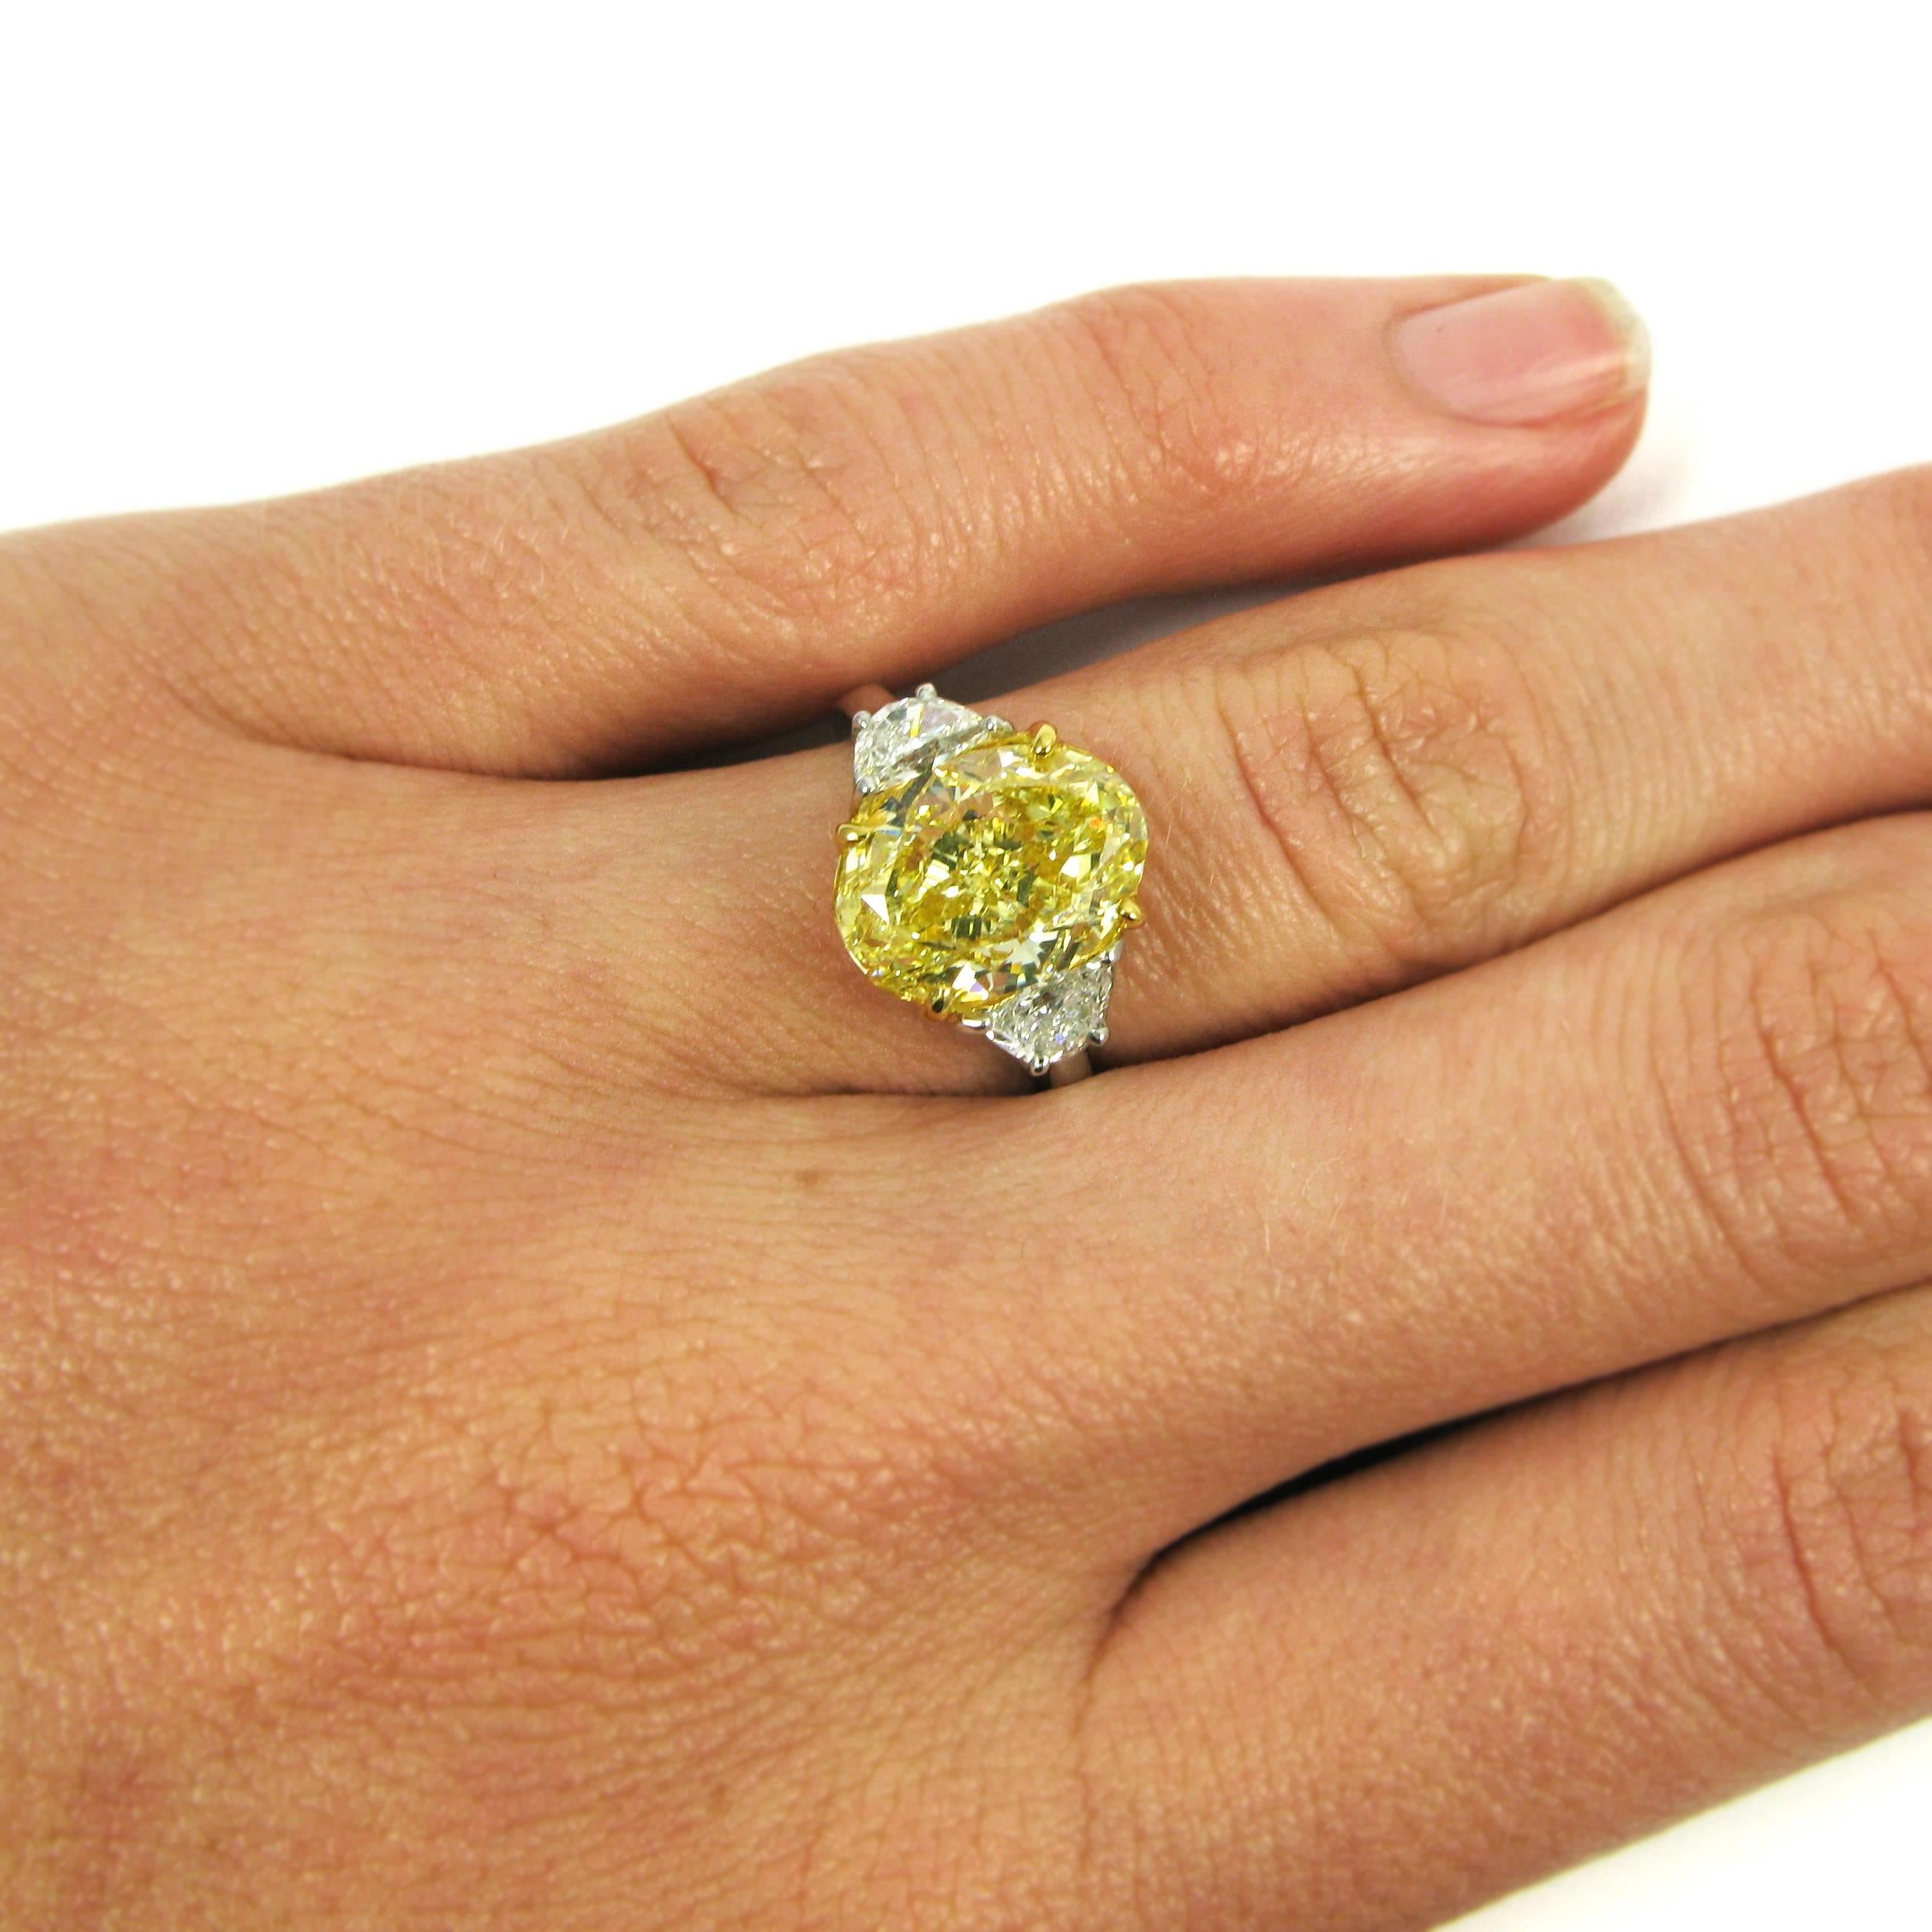 Stunning GIA Certified 4.61 Carat Fancy Intense Yellow Oval Diamond Ring 2